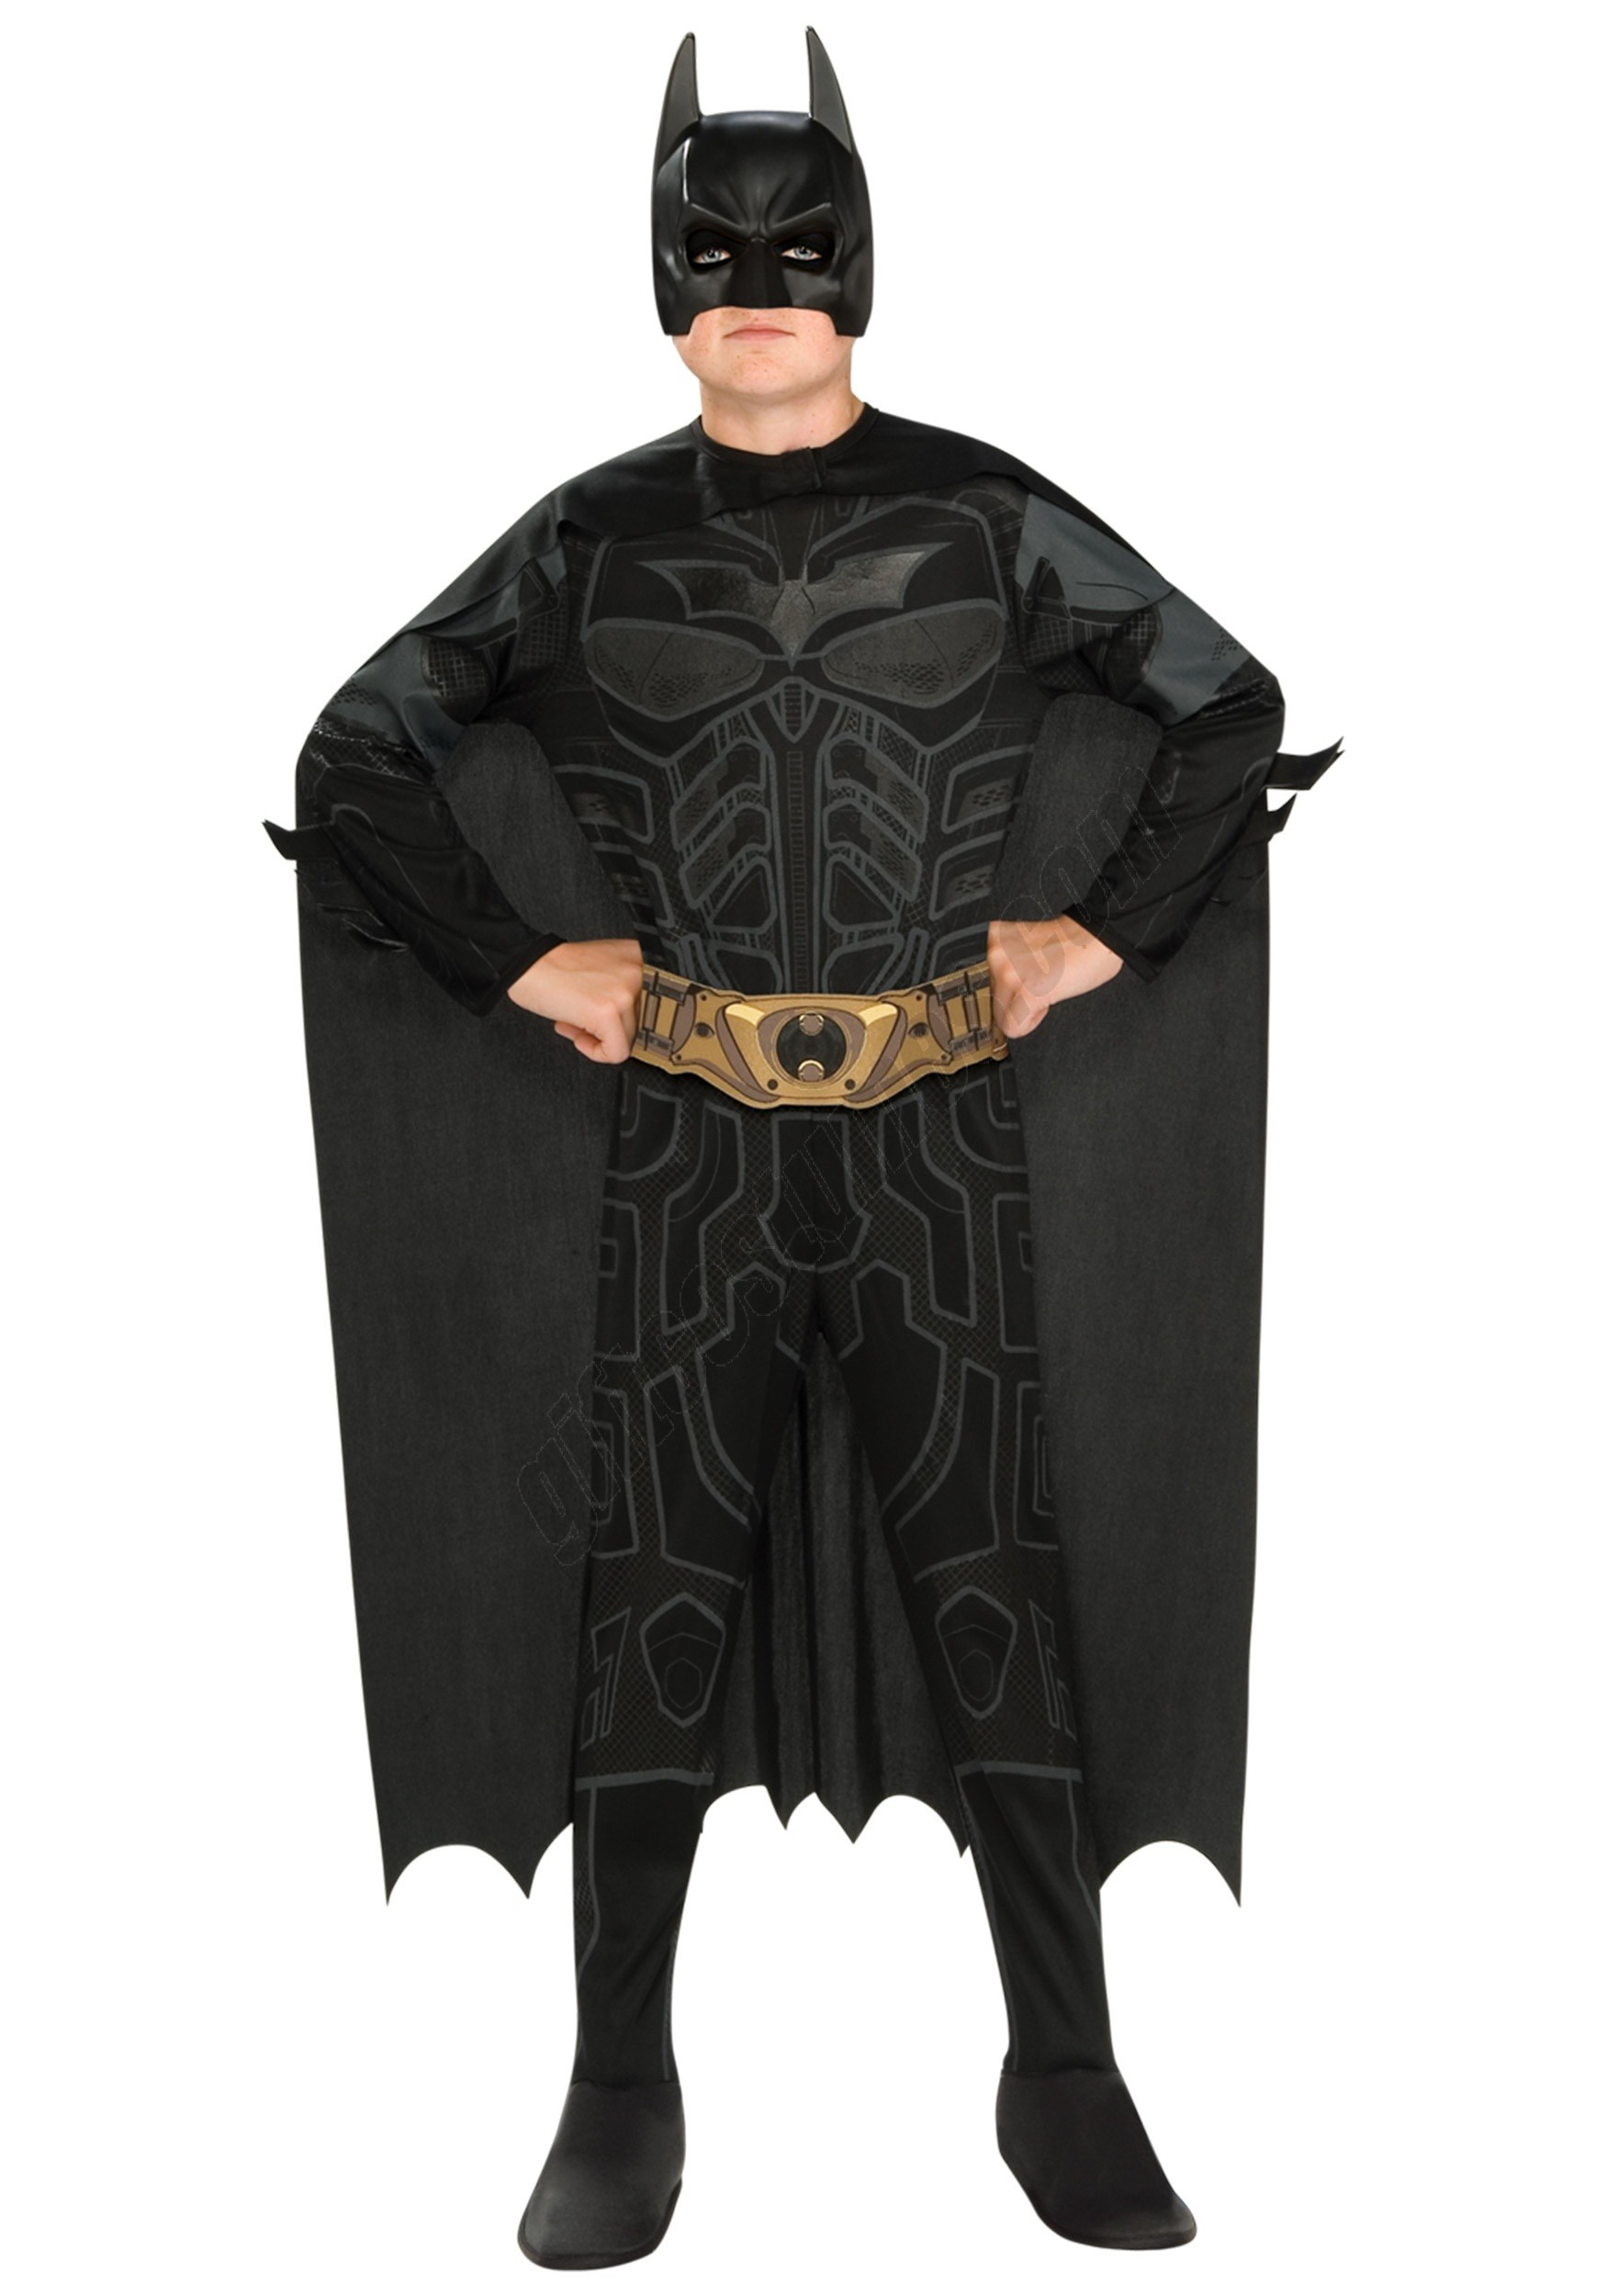 Tween Dark Knight Rises Batman Costume Promotions - Tween Dark Knight Rises Batman Costume Promotions